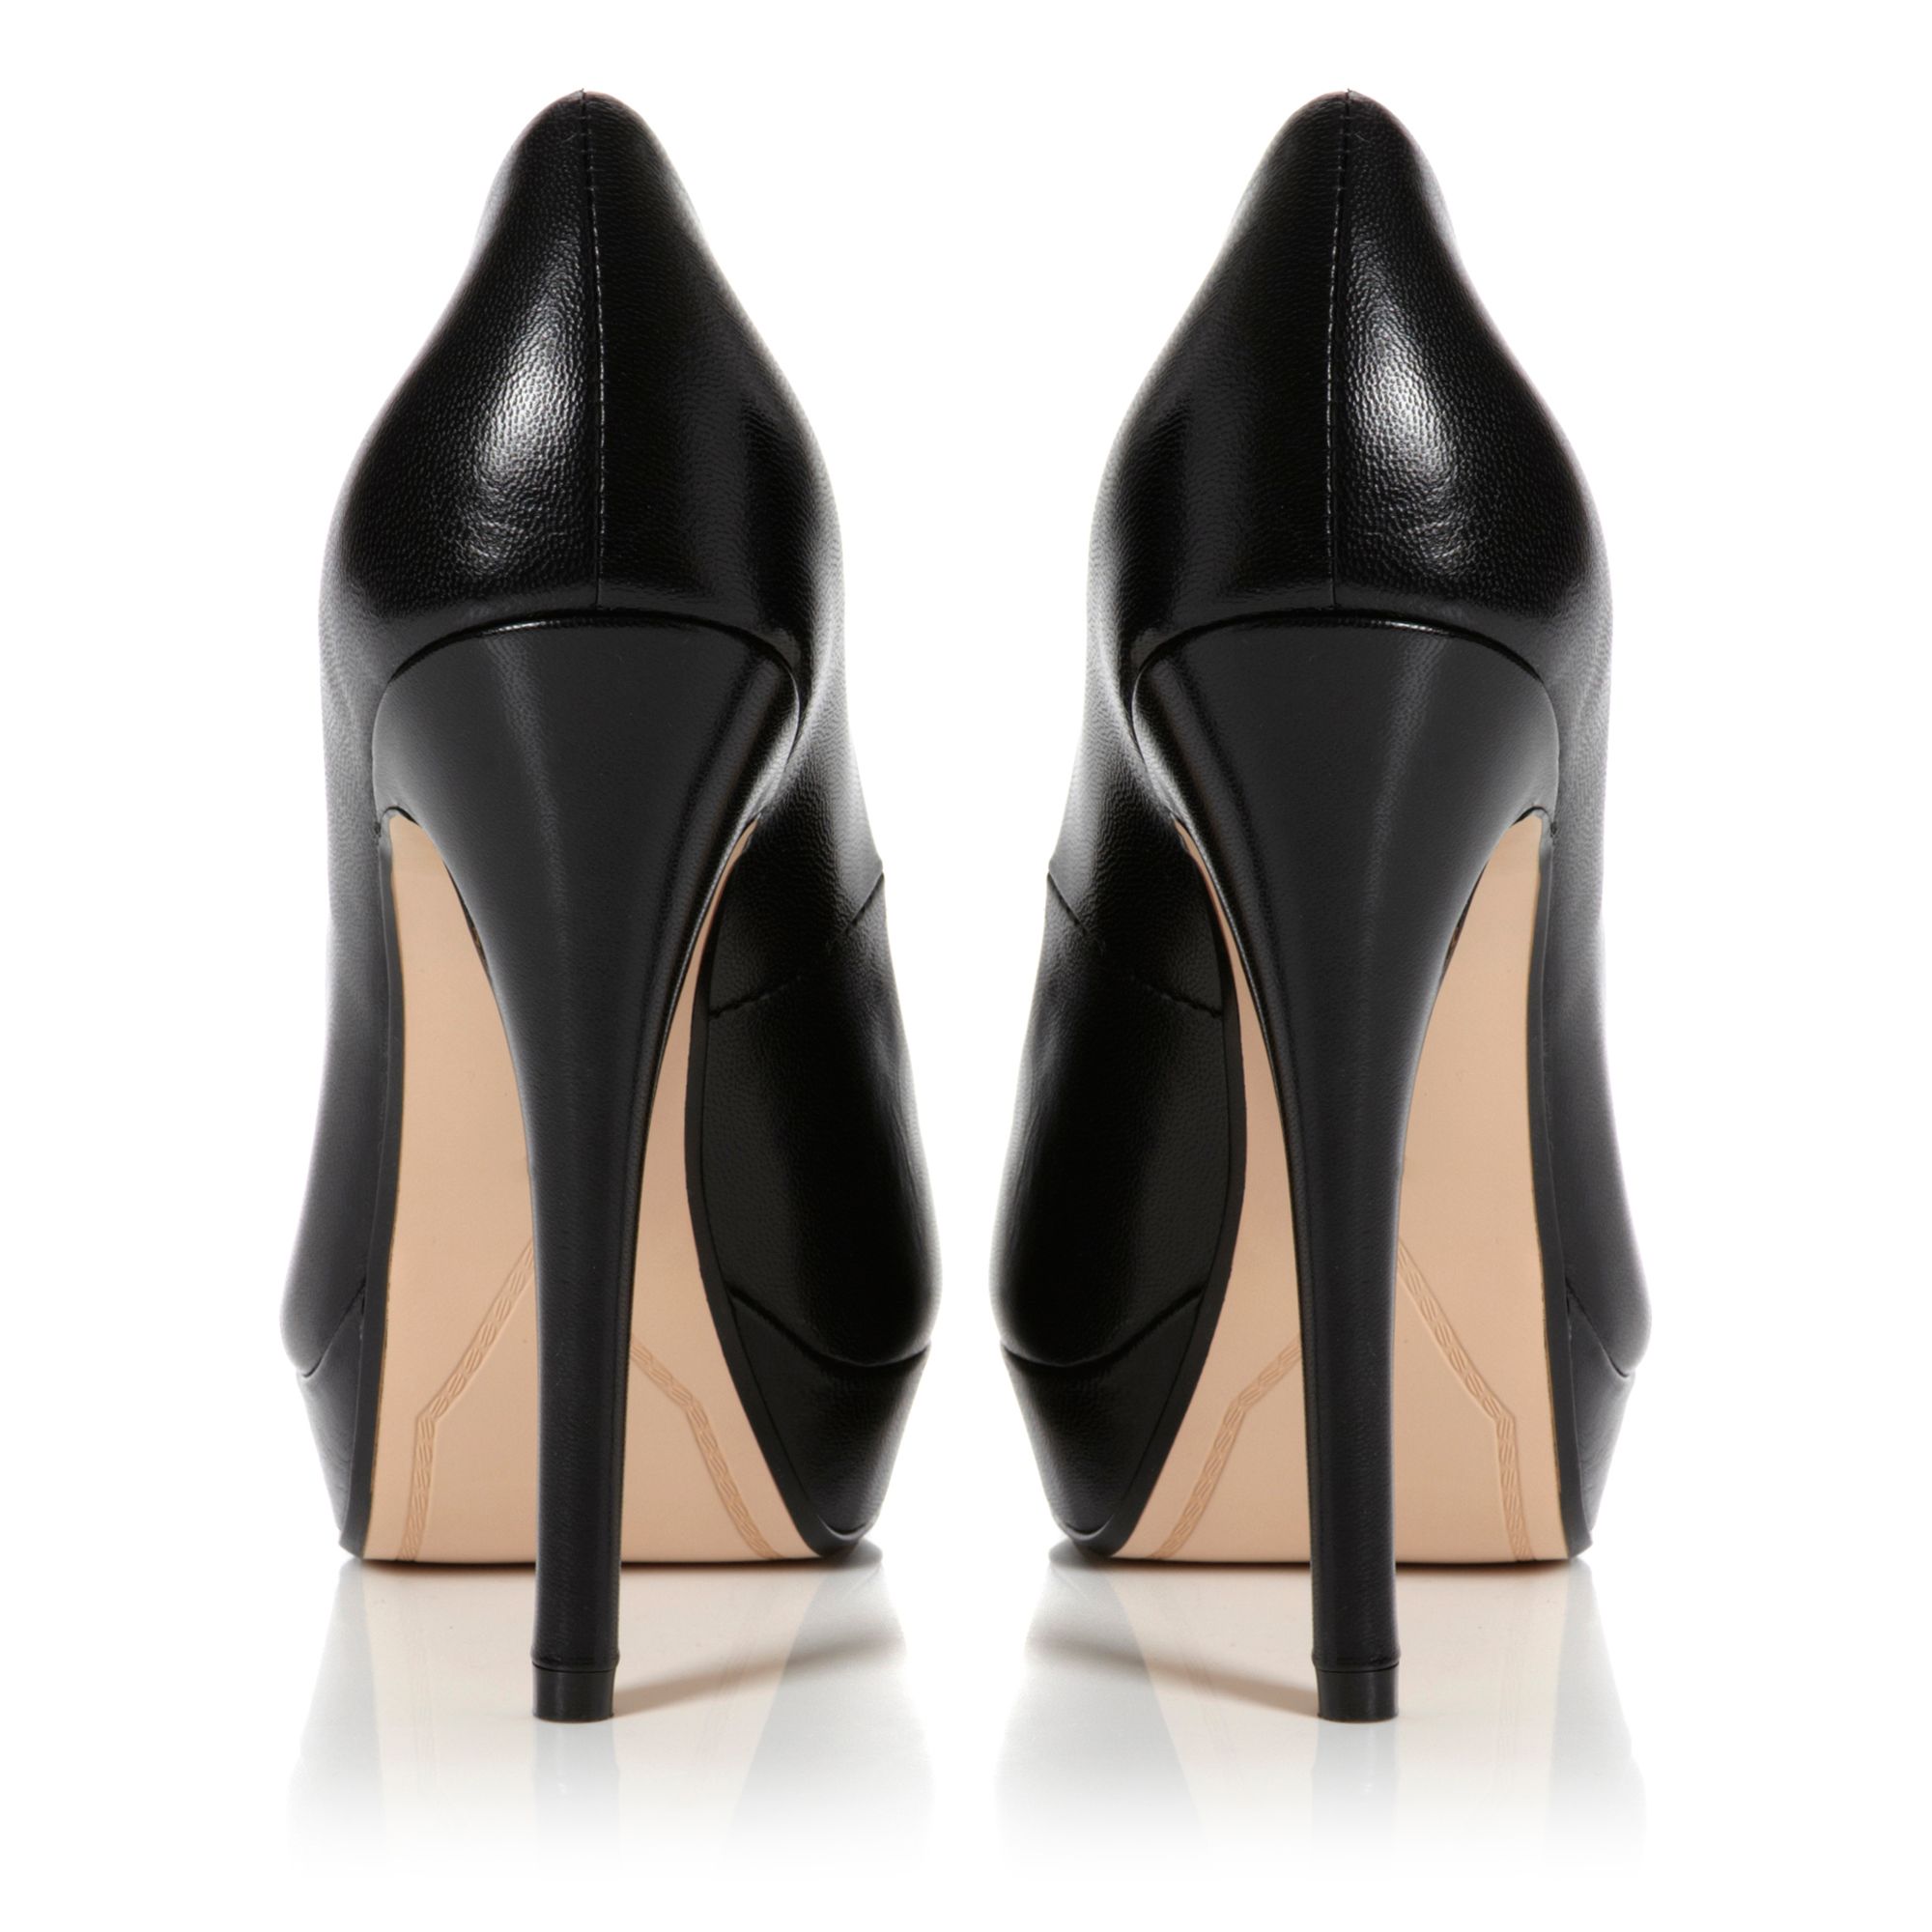 Dune Allegro Stiletto Round Toe Court Shoes in Black | Lyst